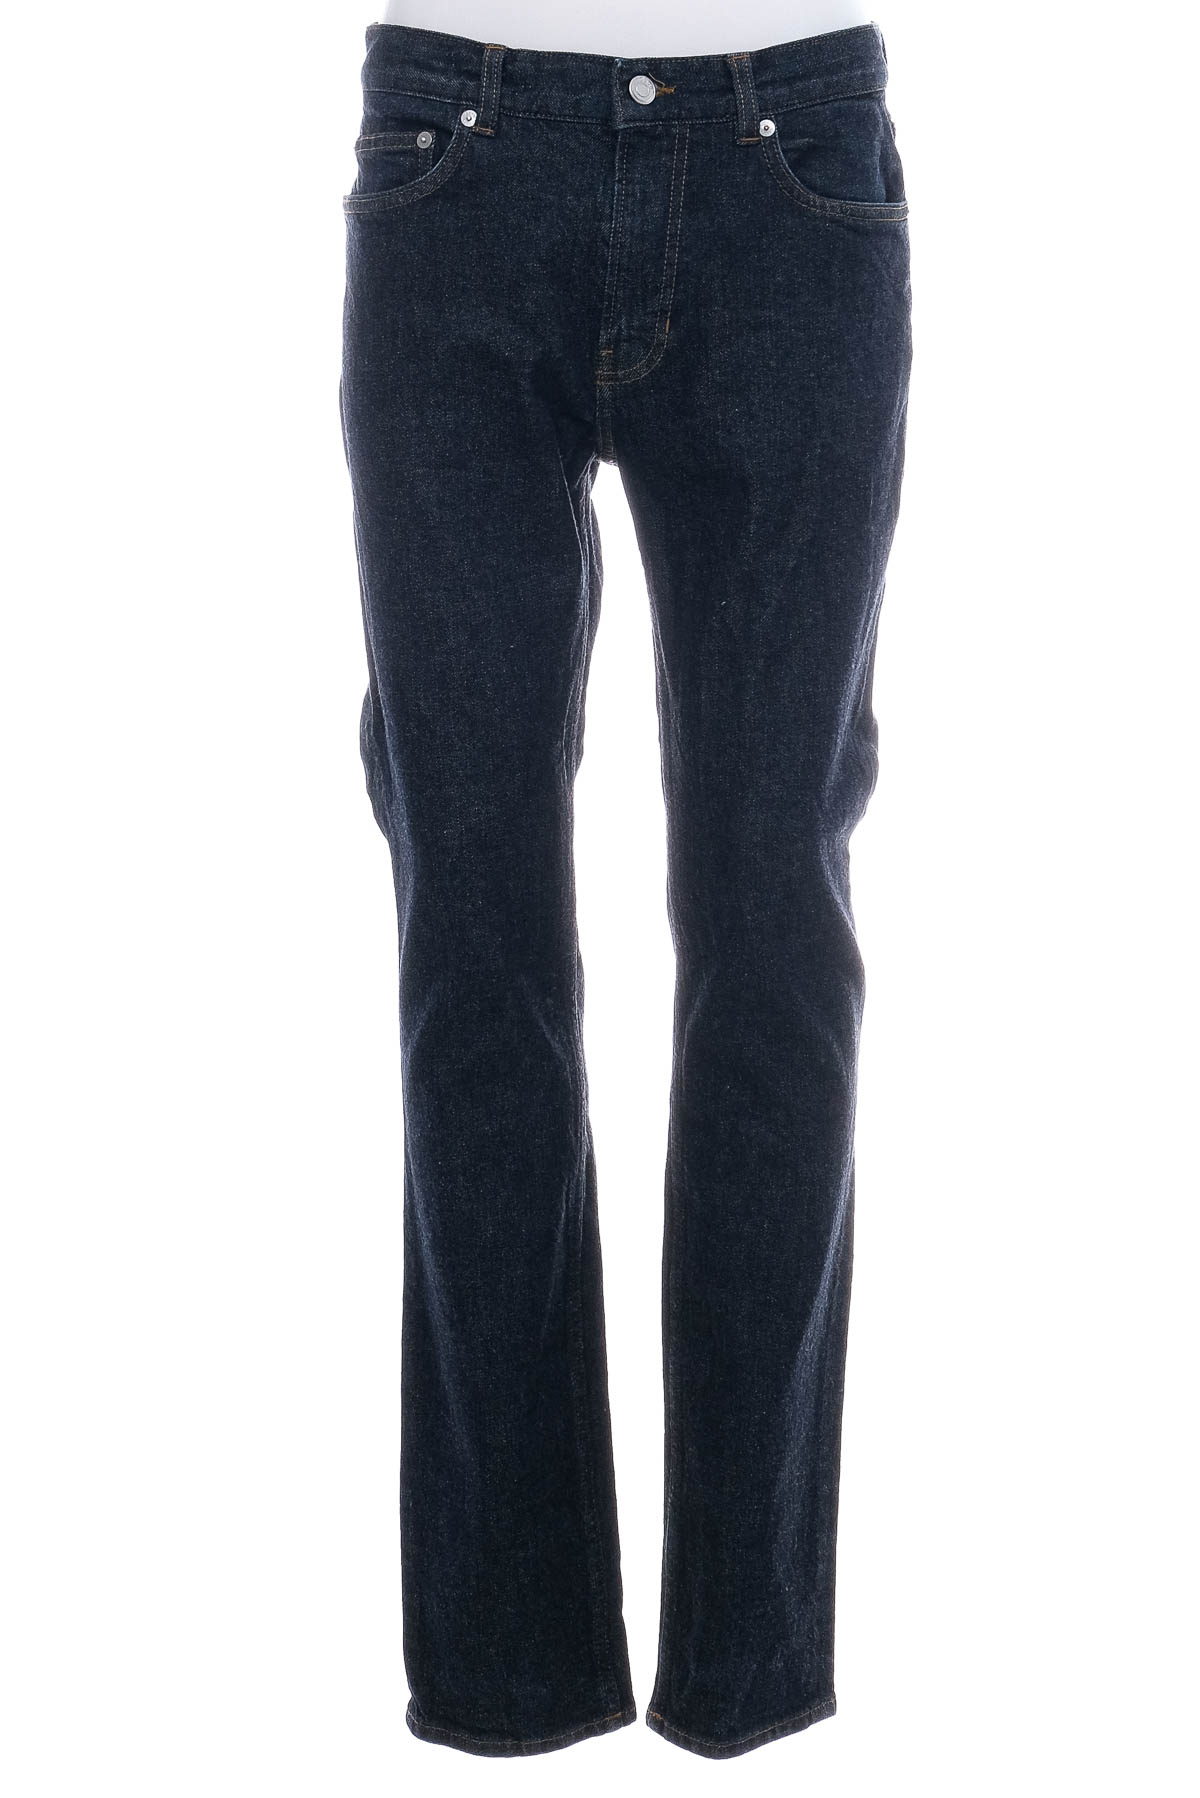 Men's jeans - ARKET - 0